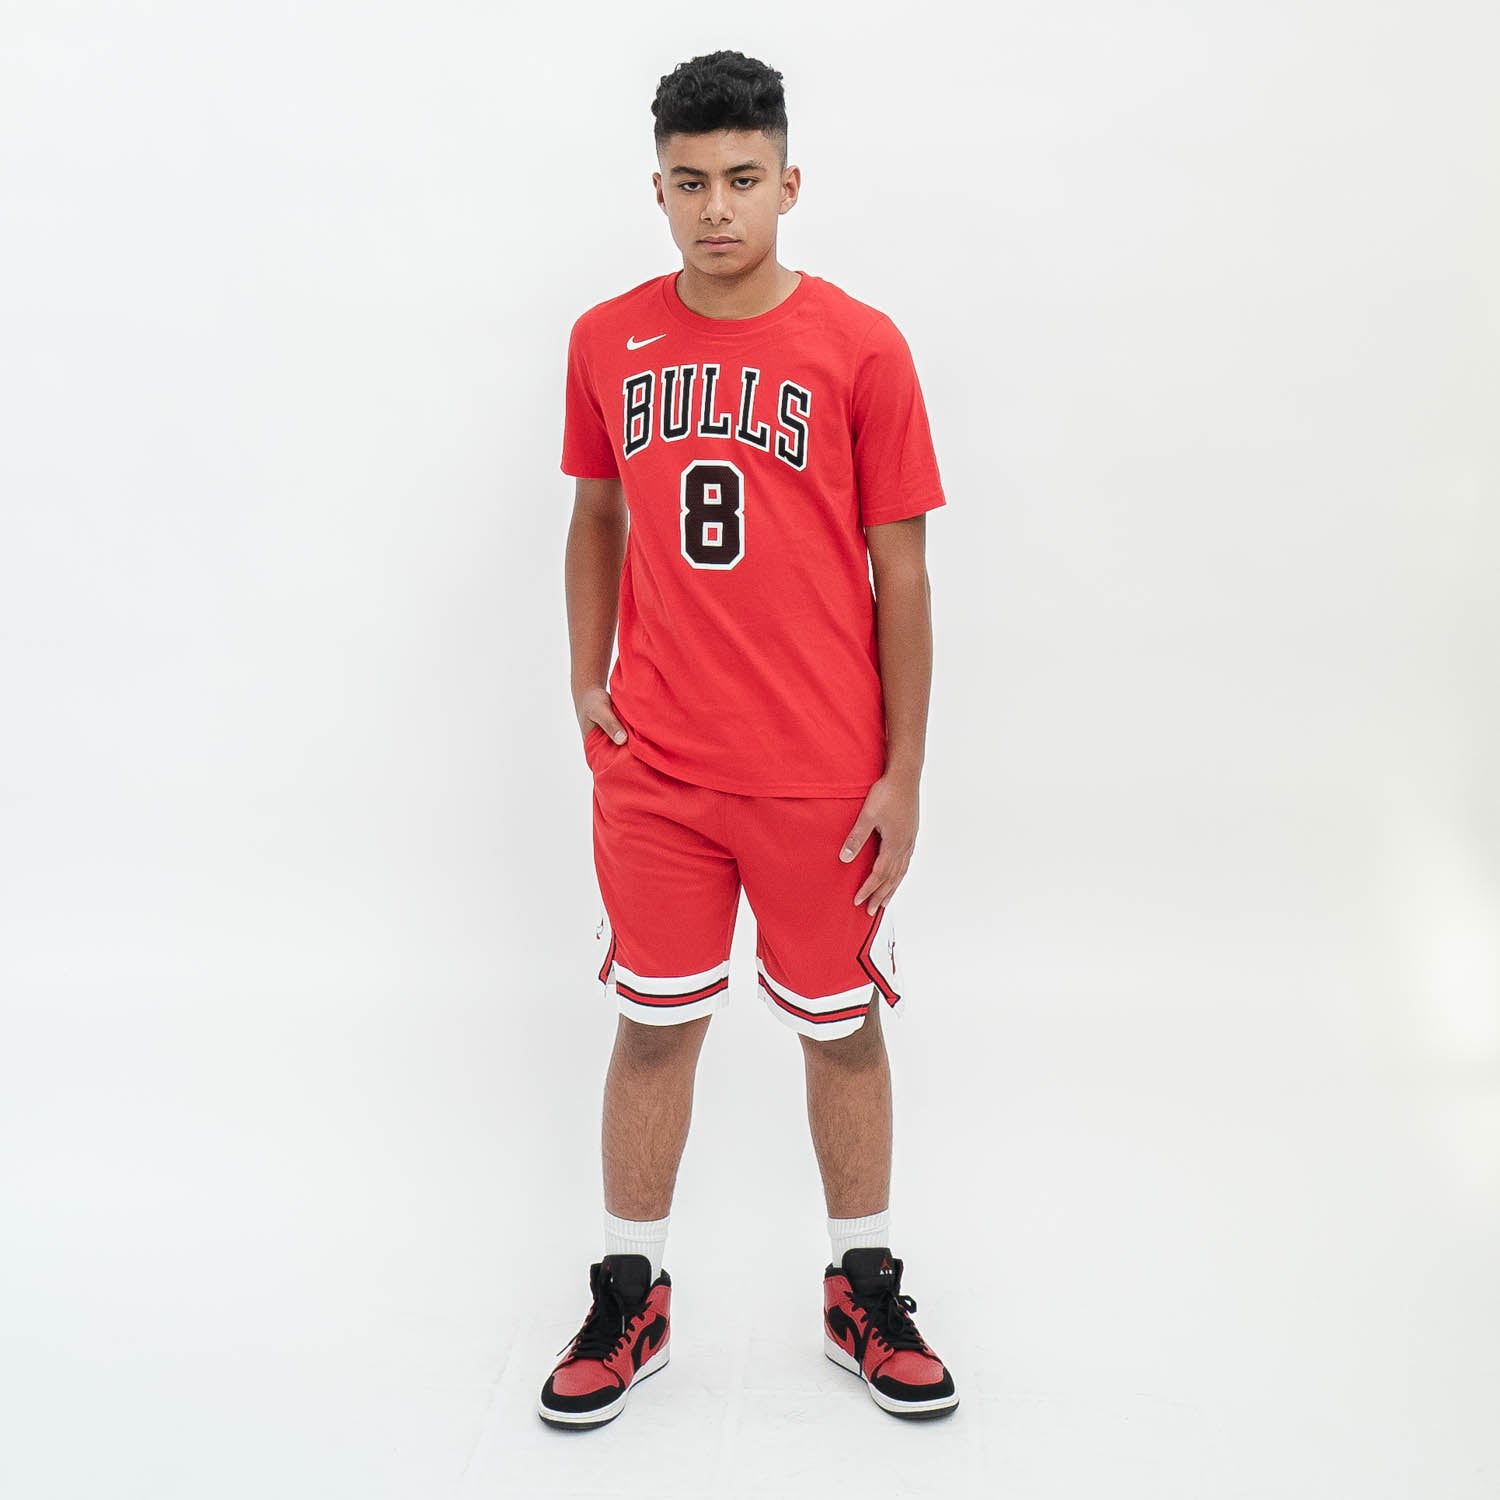 Nike Performance NBA CHICAGO BULLS SWINGMAN ICON JERSEY - NBA jersey -  university red/red 